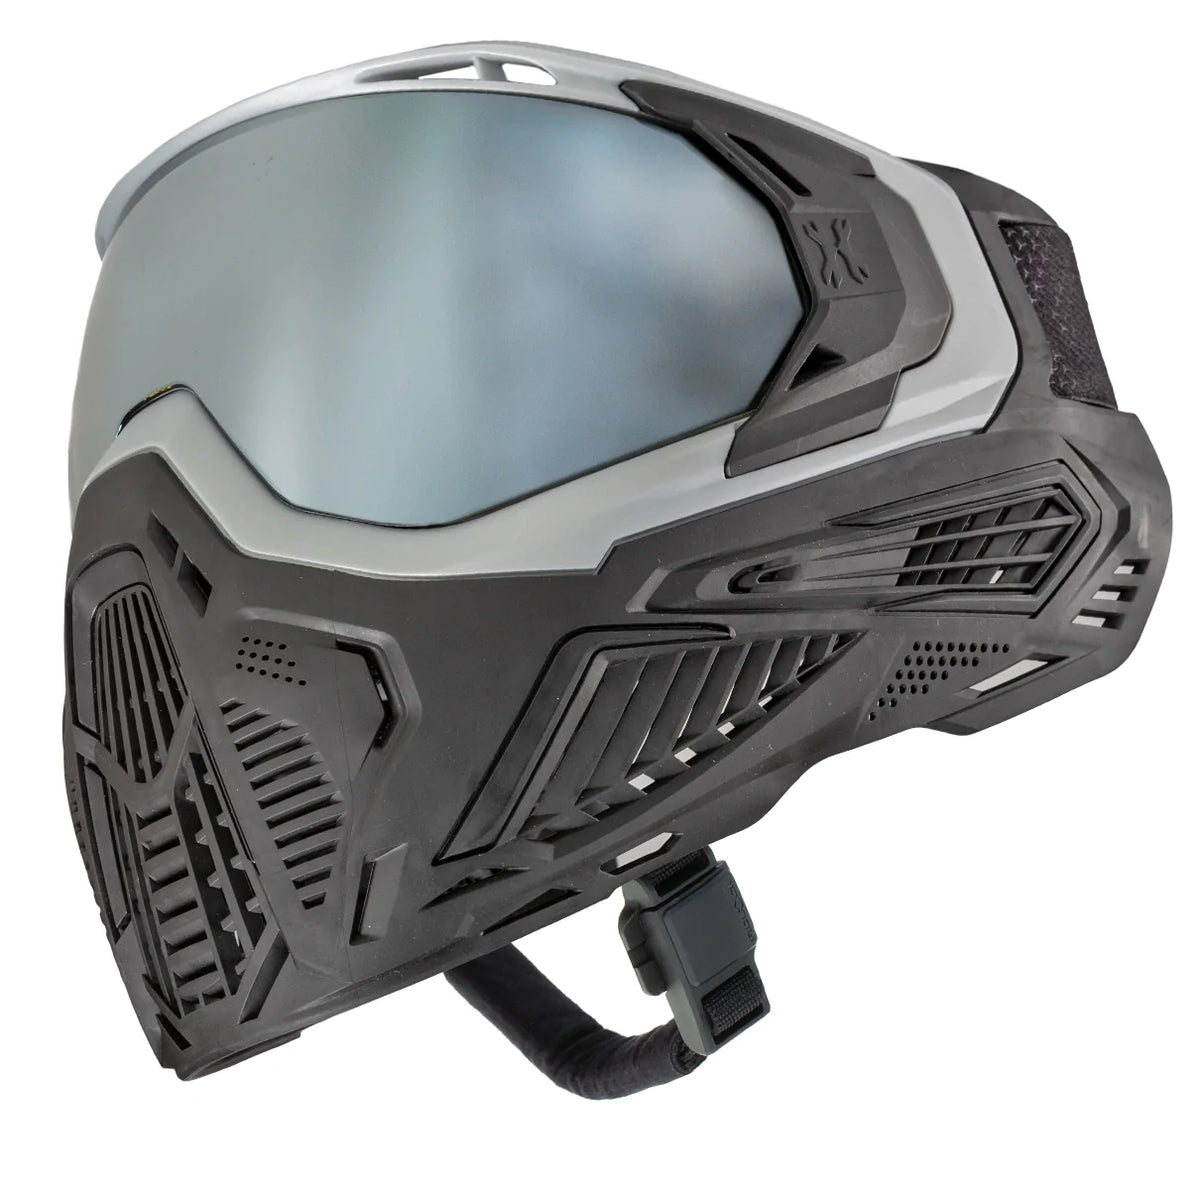 Slr Goggle - Mercury (Grey/Black) Silver Lens | Paintball Goggle | Mask | Hk Army